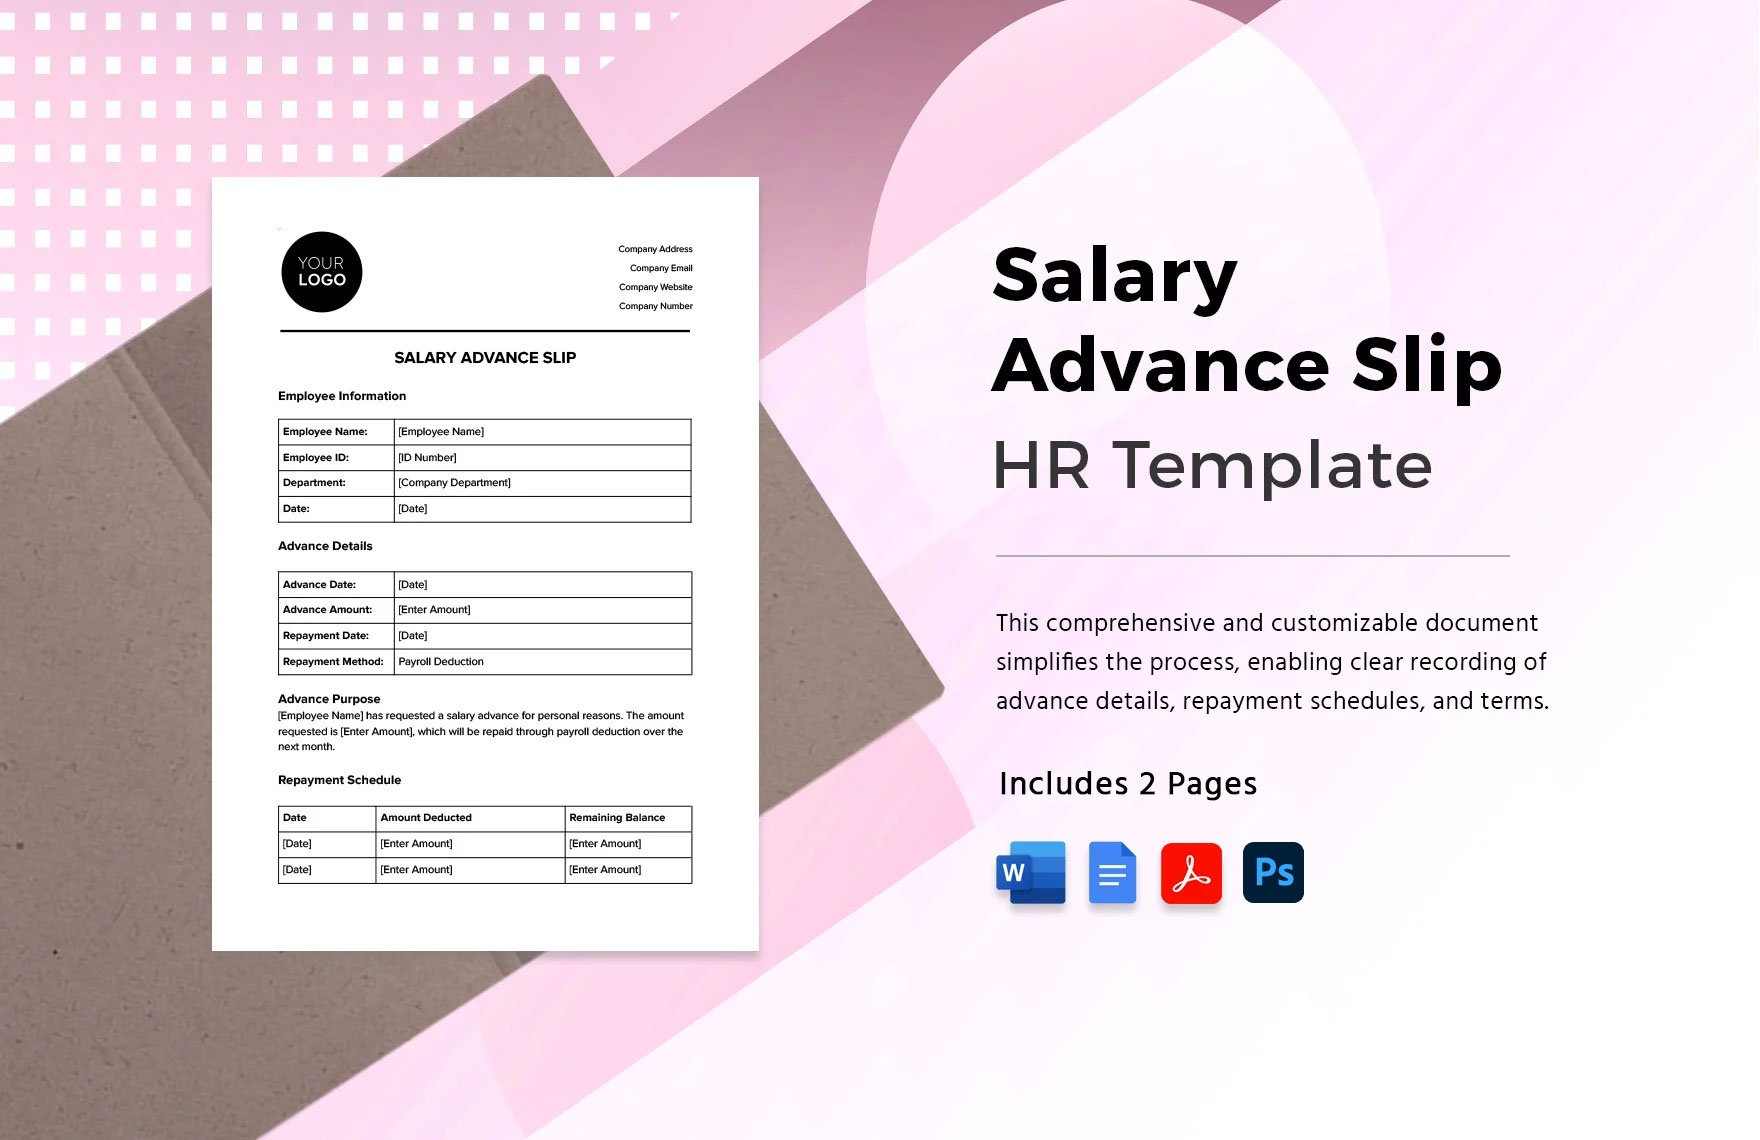 Salary Advance Slip HR Template